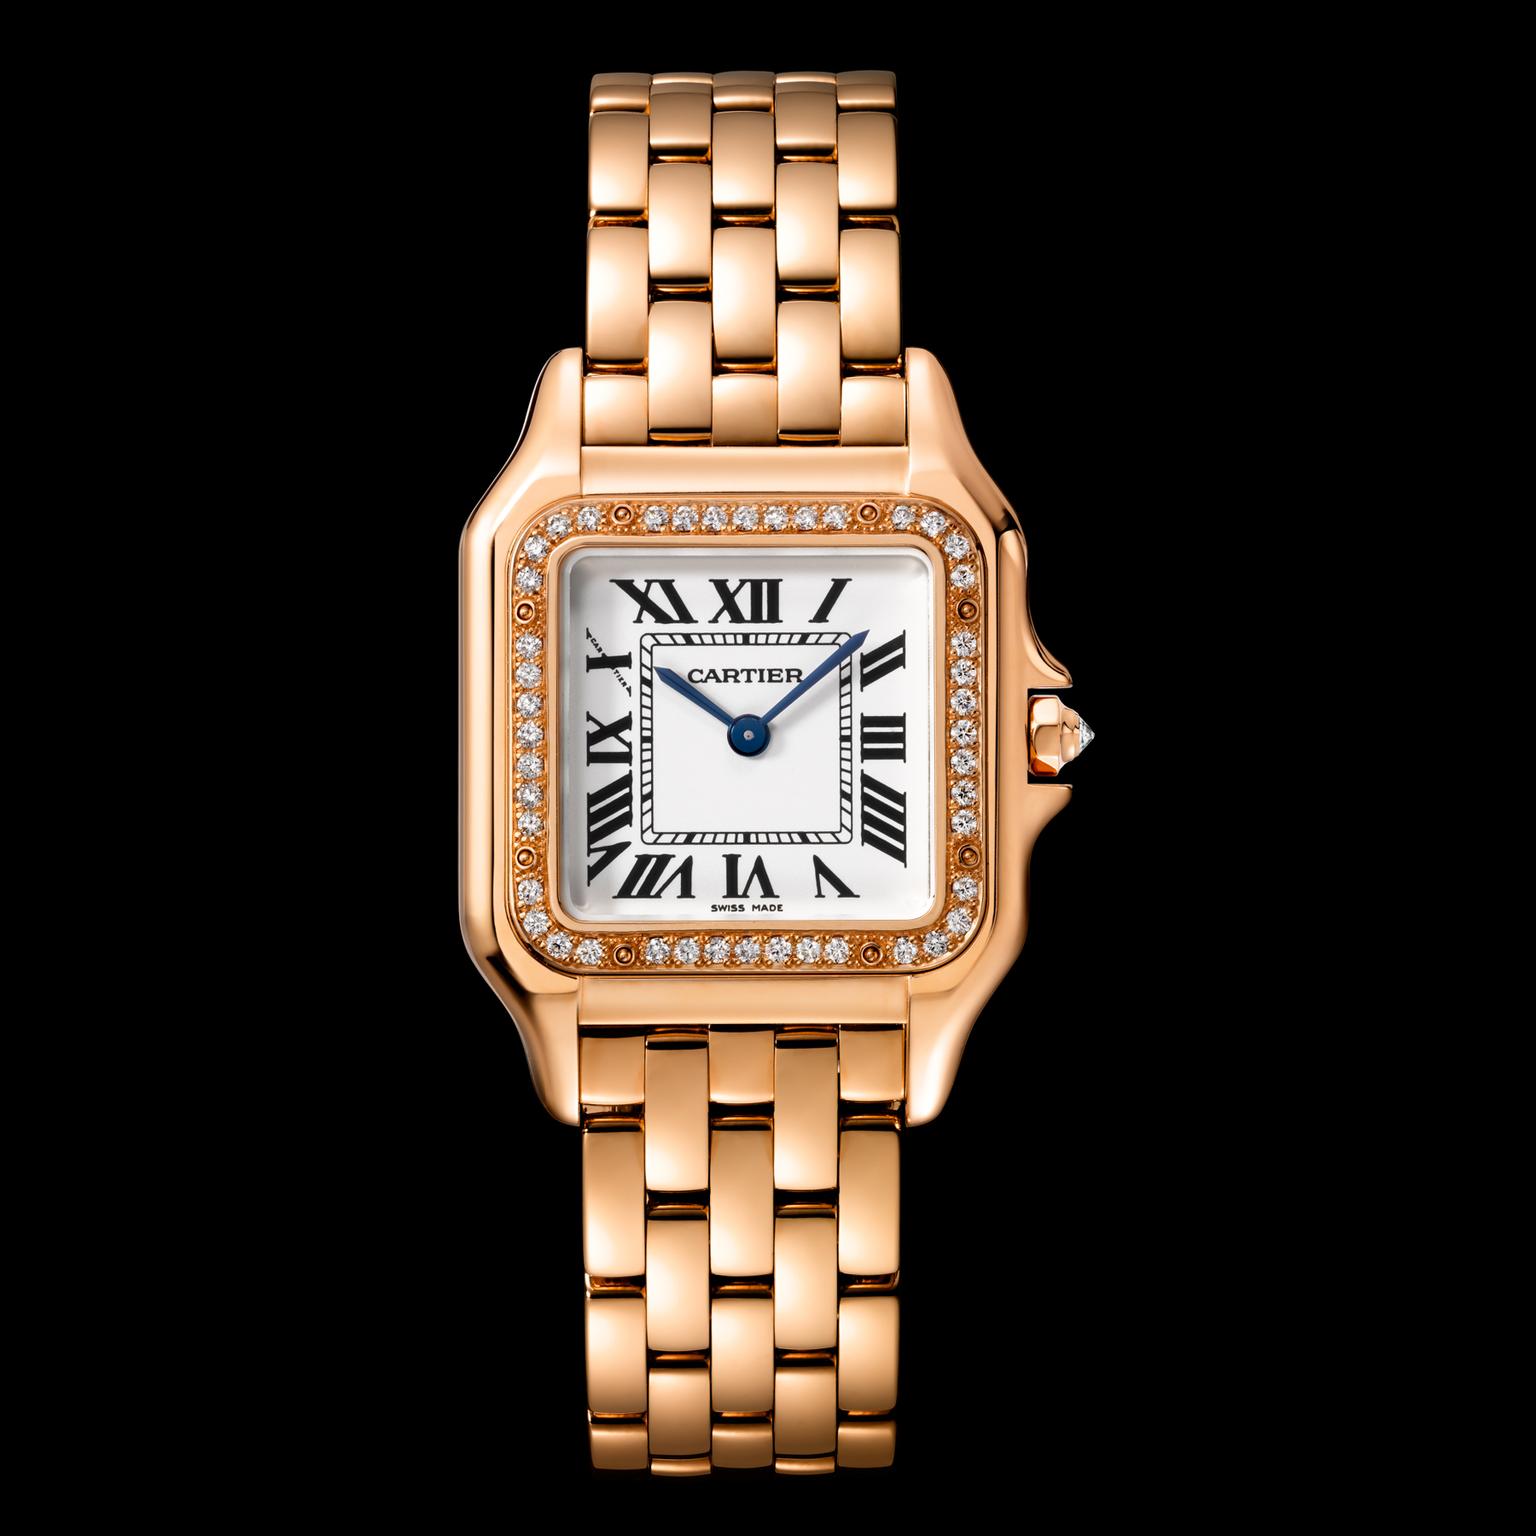 Medium size Panthère de Cartier watch in rose gold